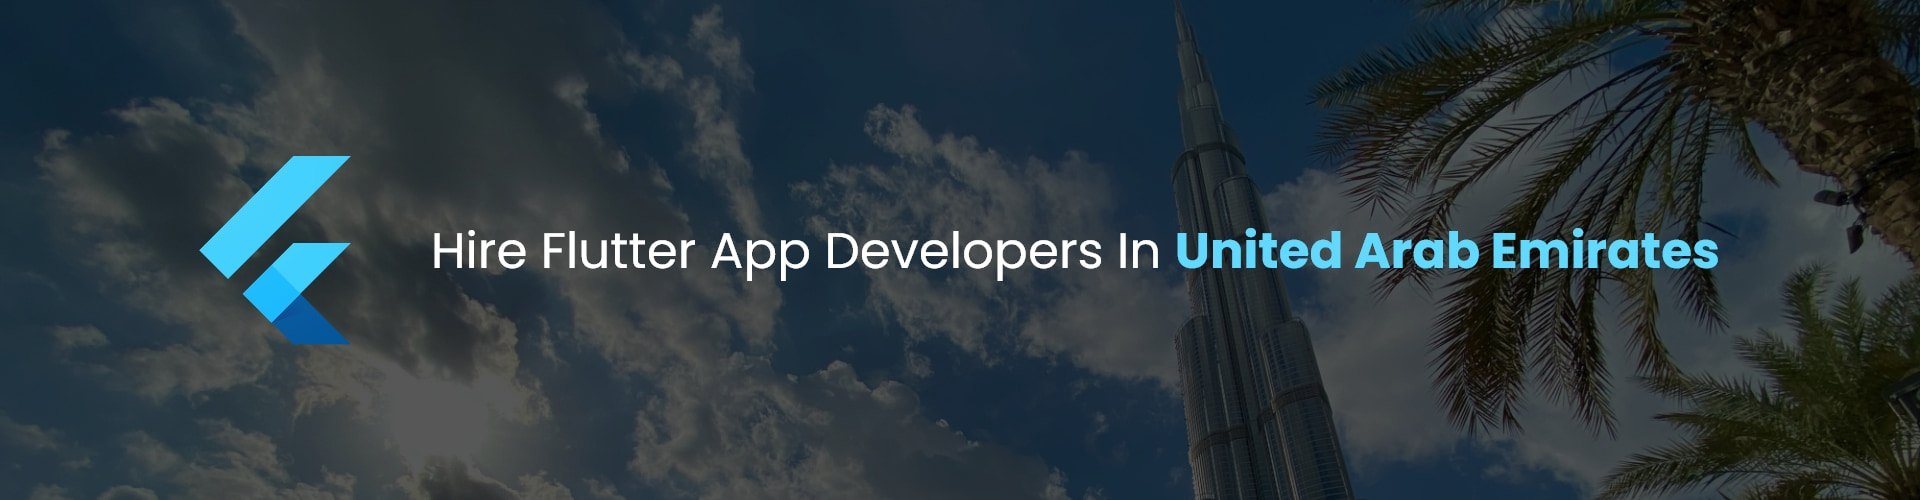 hire flutter app developers in uae